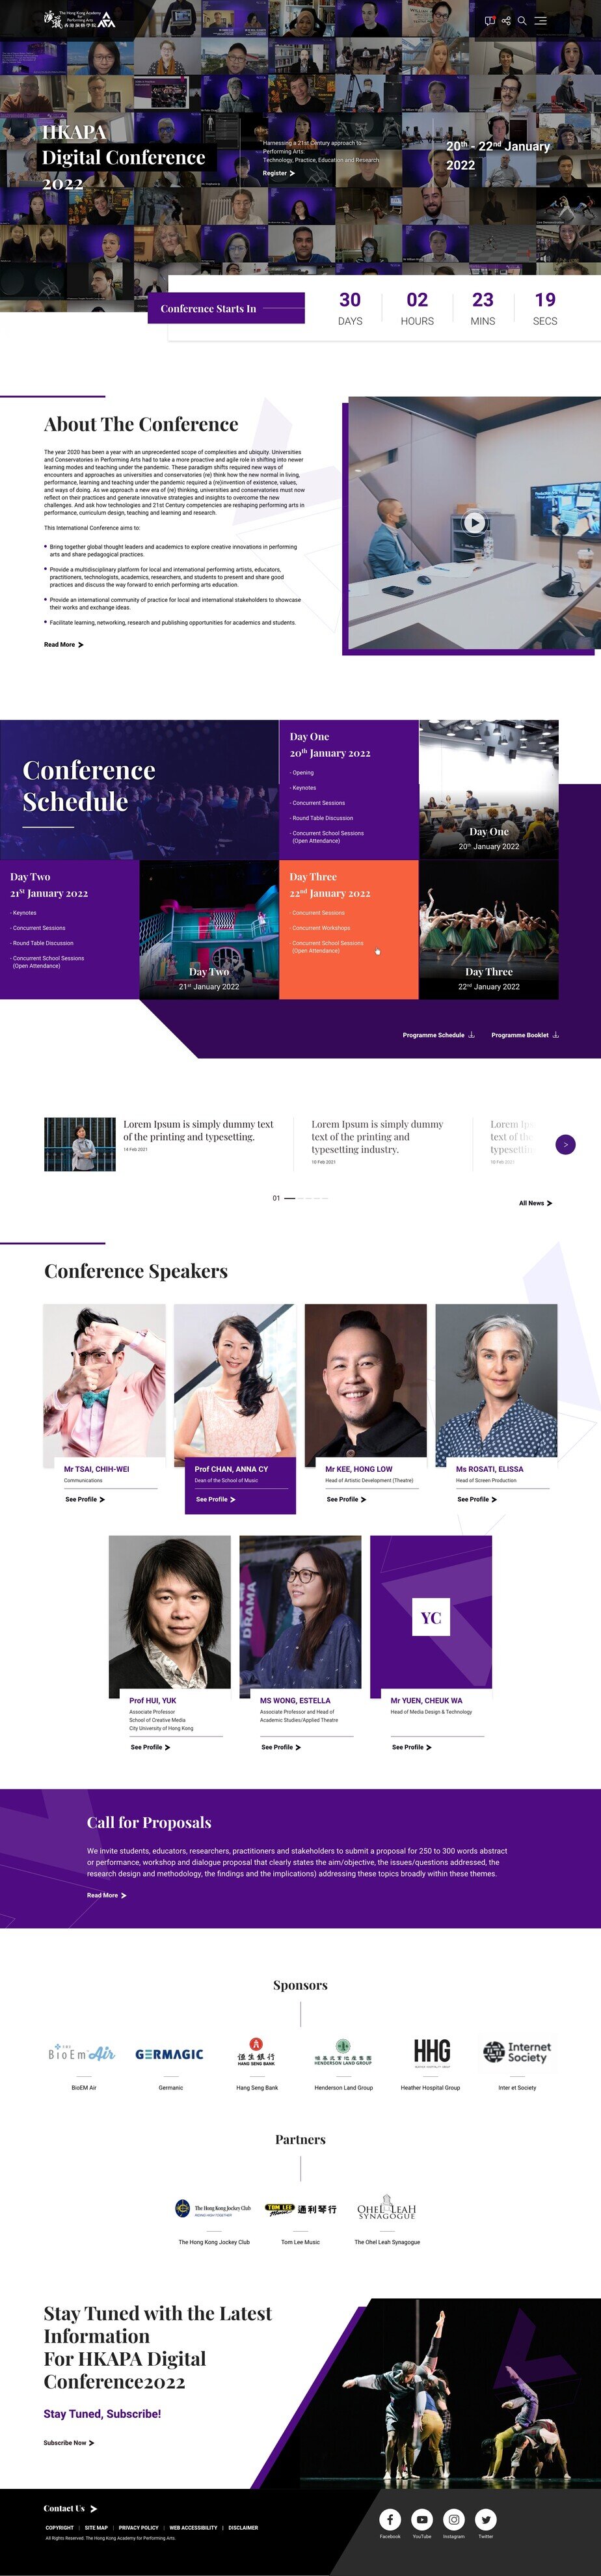 Hong Kong Academy for Performing Arts website screenshot for desktop version 4 of 7